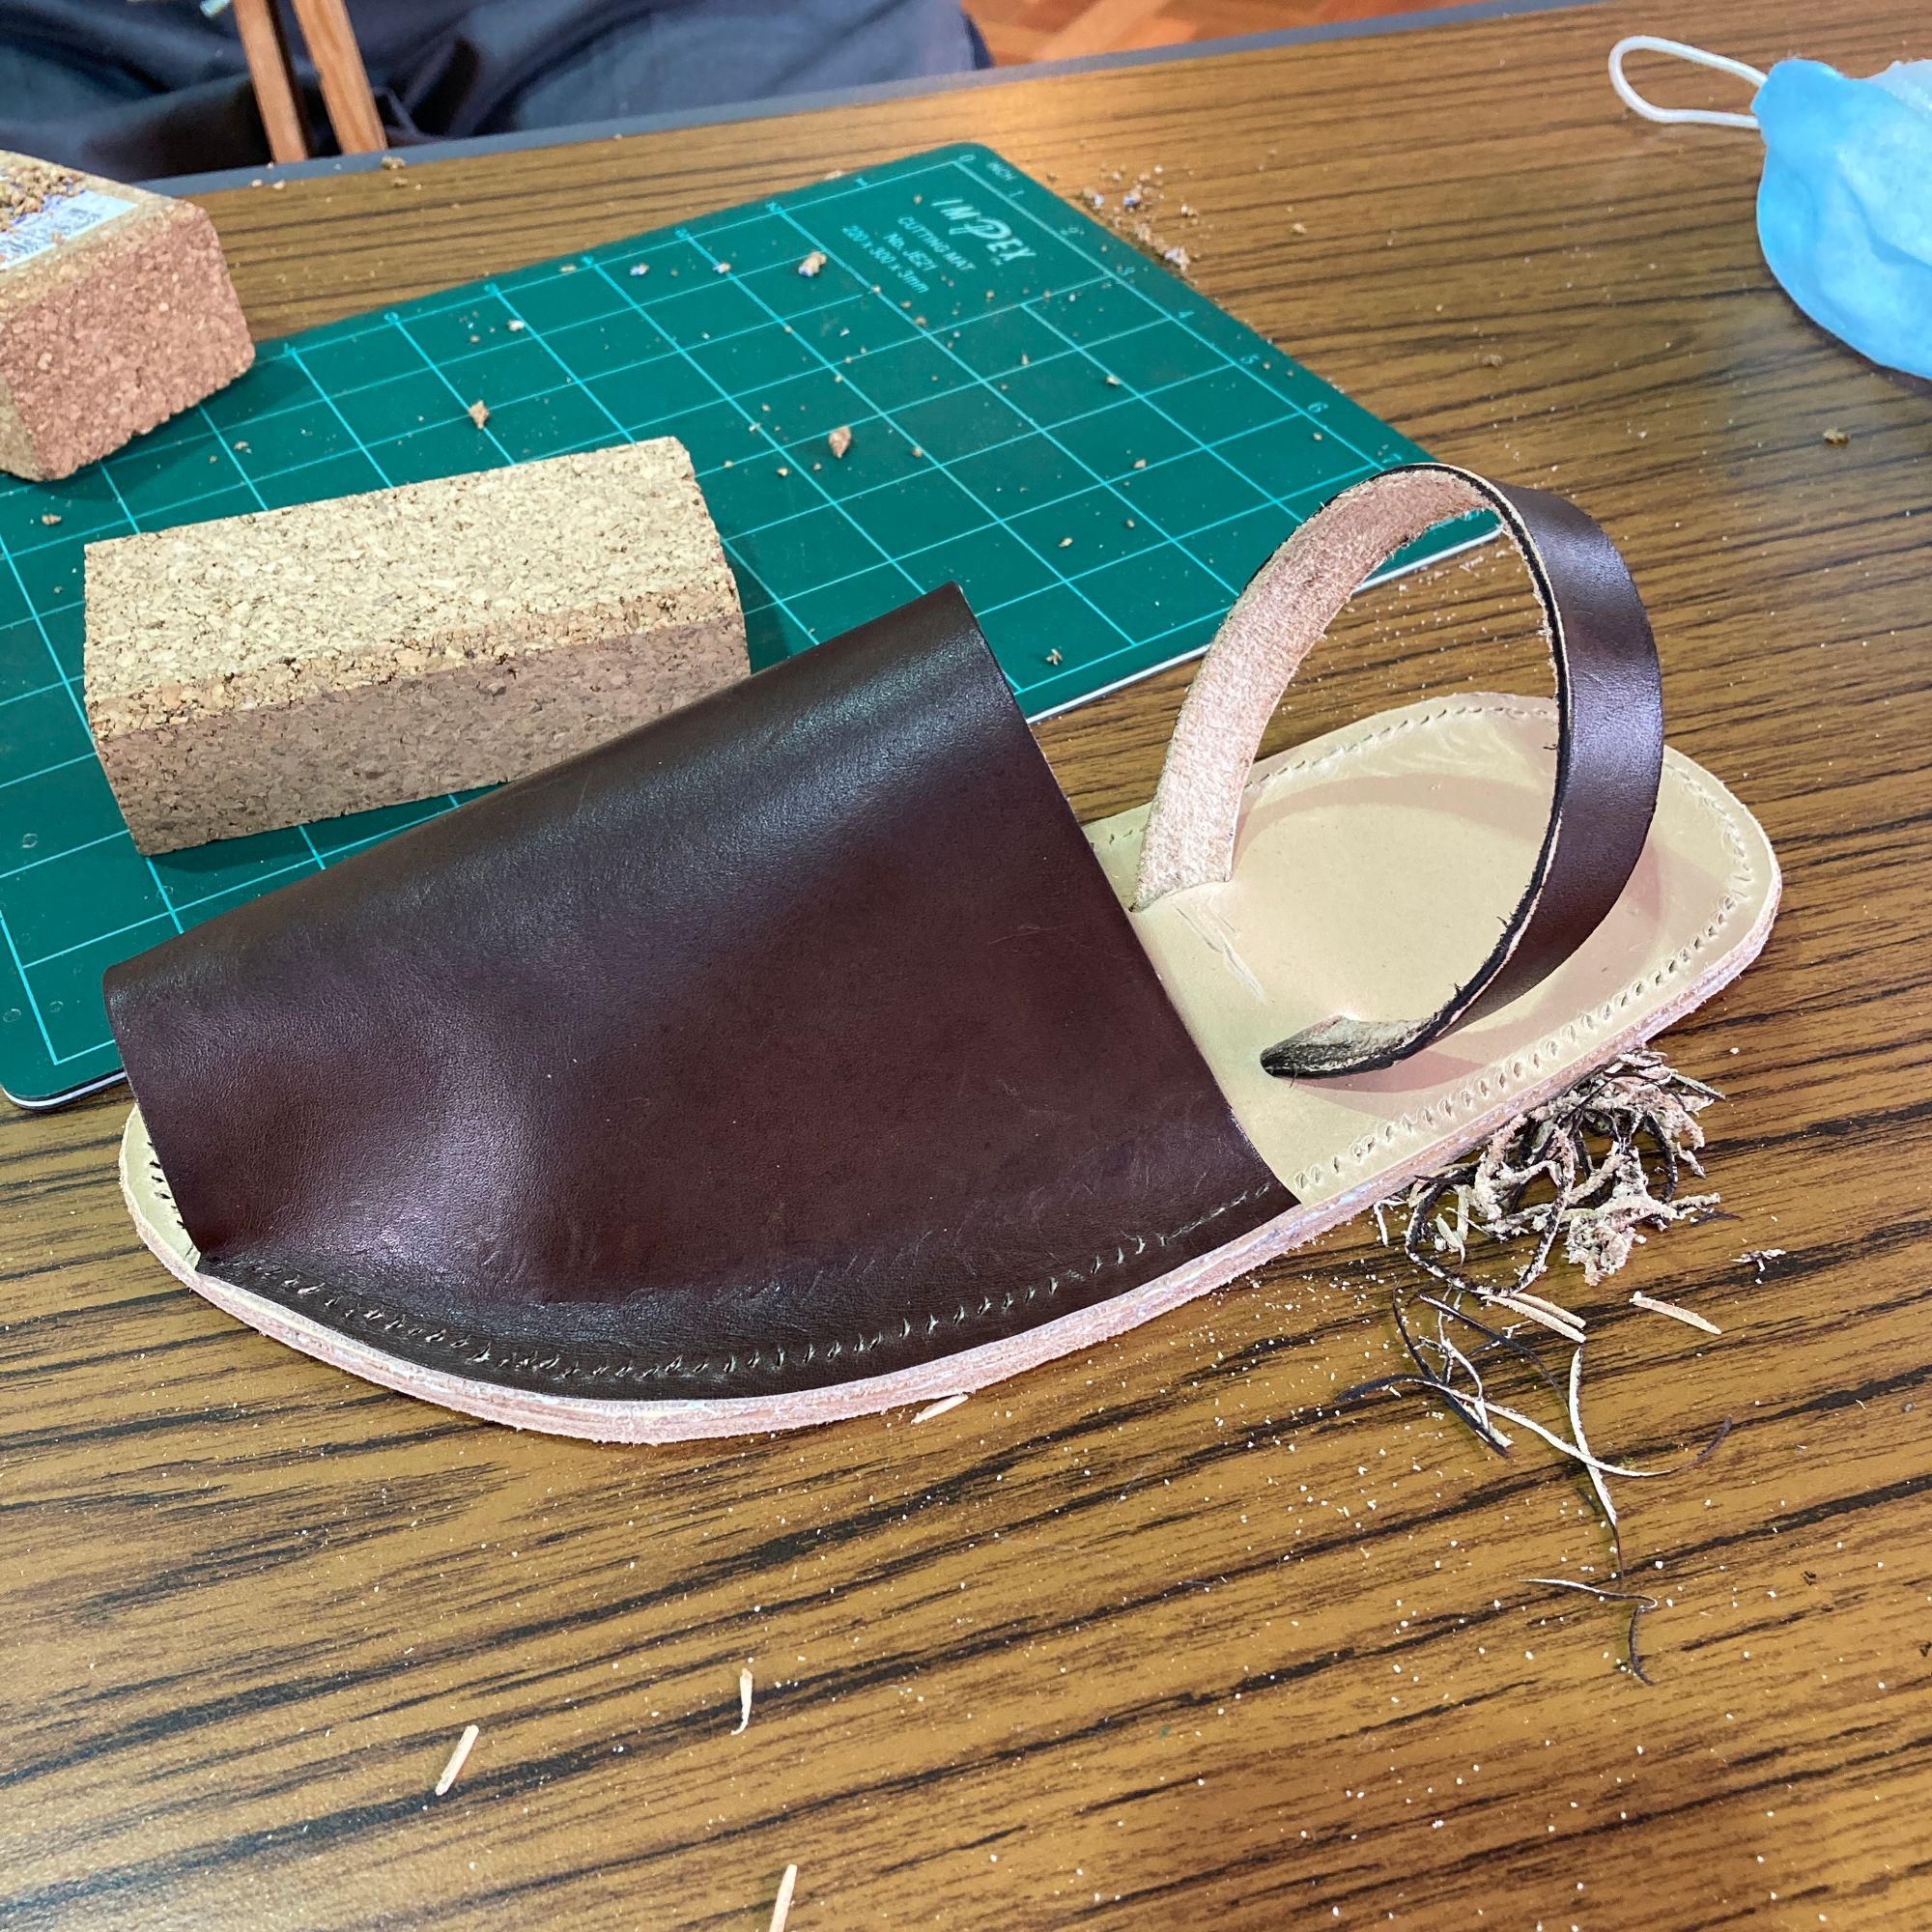 Leather Sandals Workshop - Leatherwork